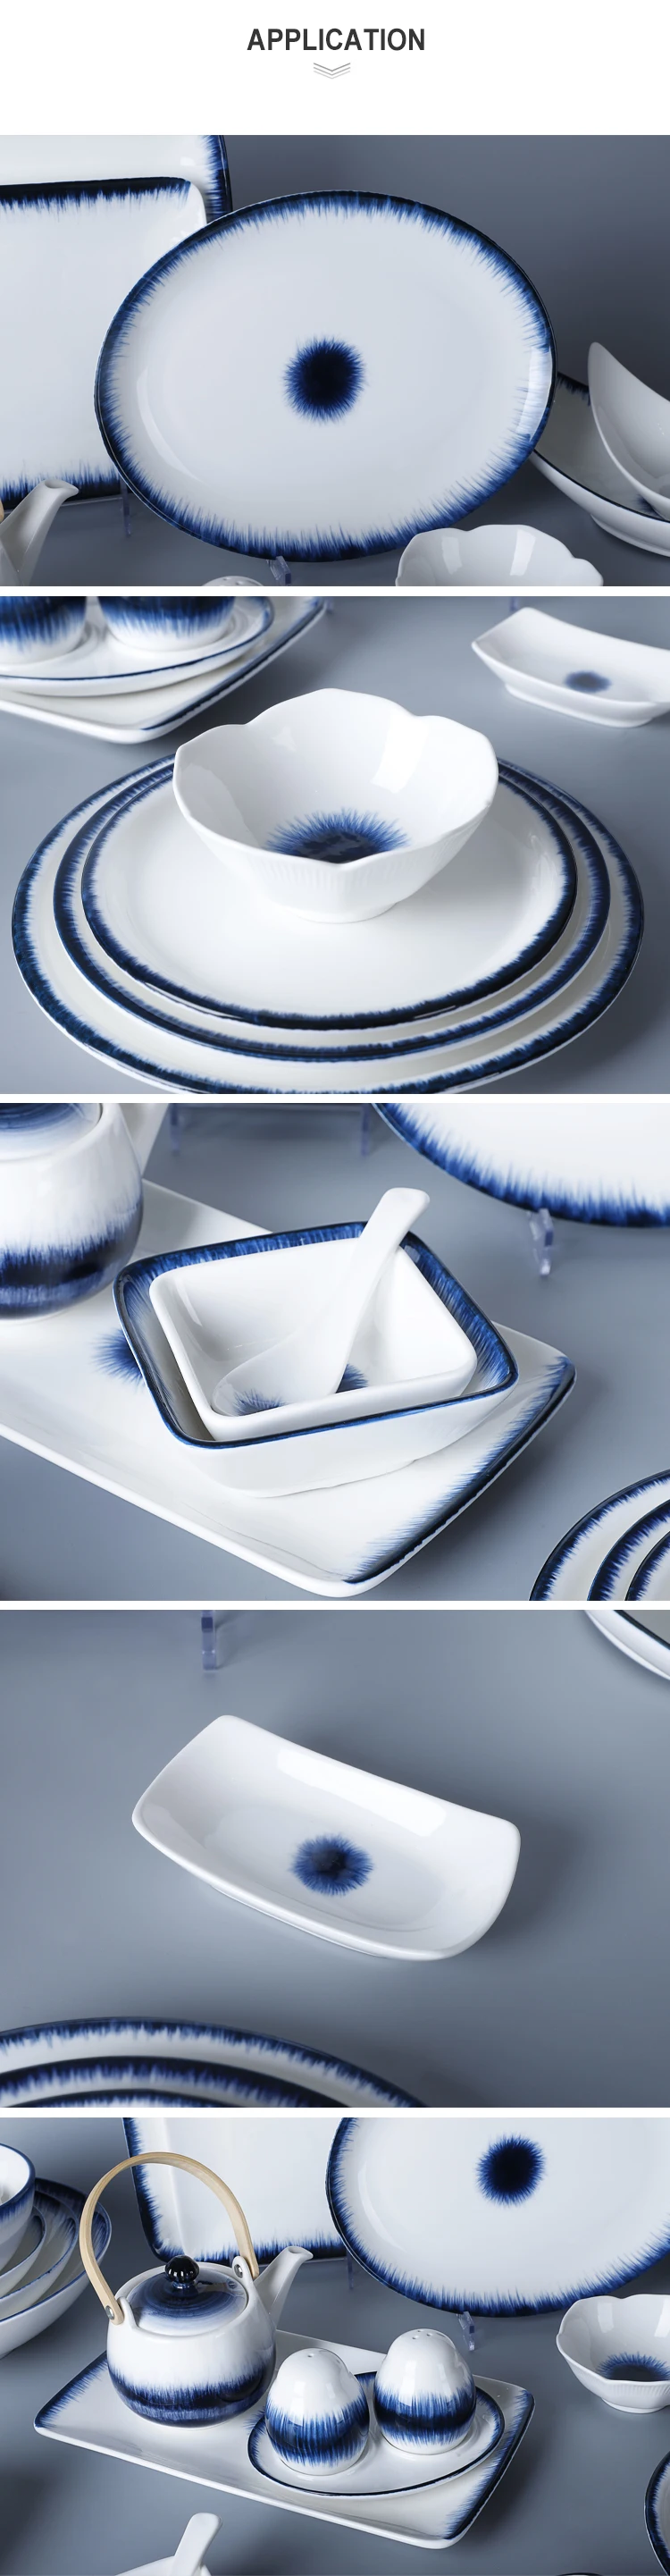 Banquet Tableware Plate, Restaurant Dinner Set Porcelain For Belgium, Wedding Plates Sets Dinnerware^